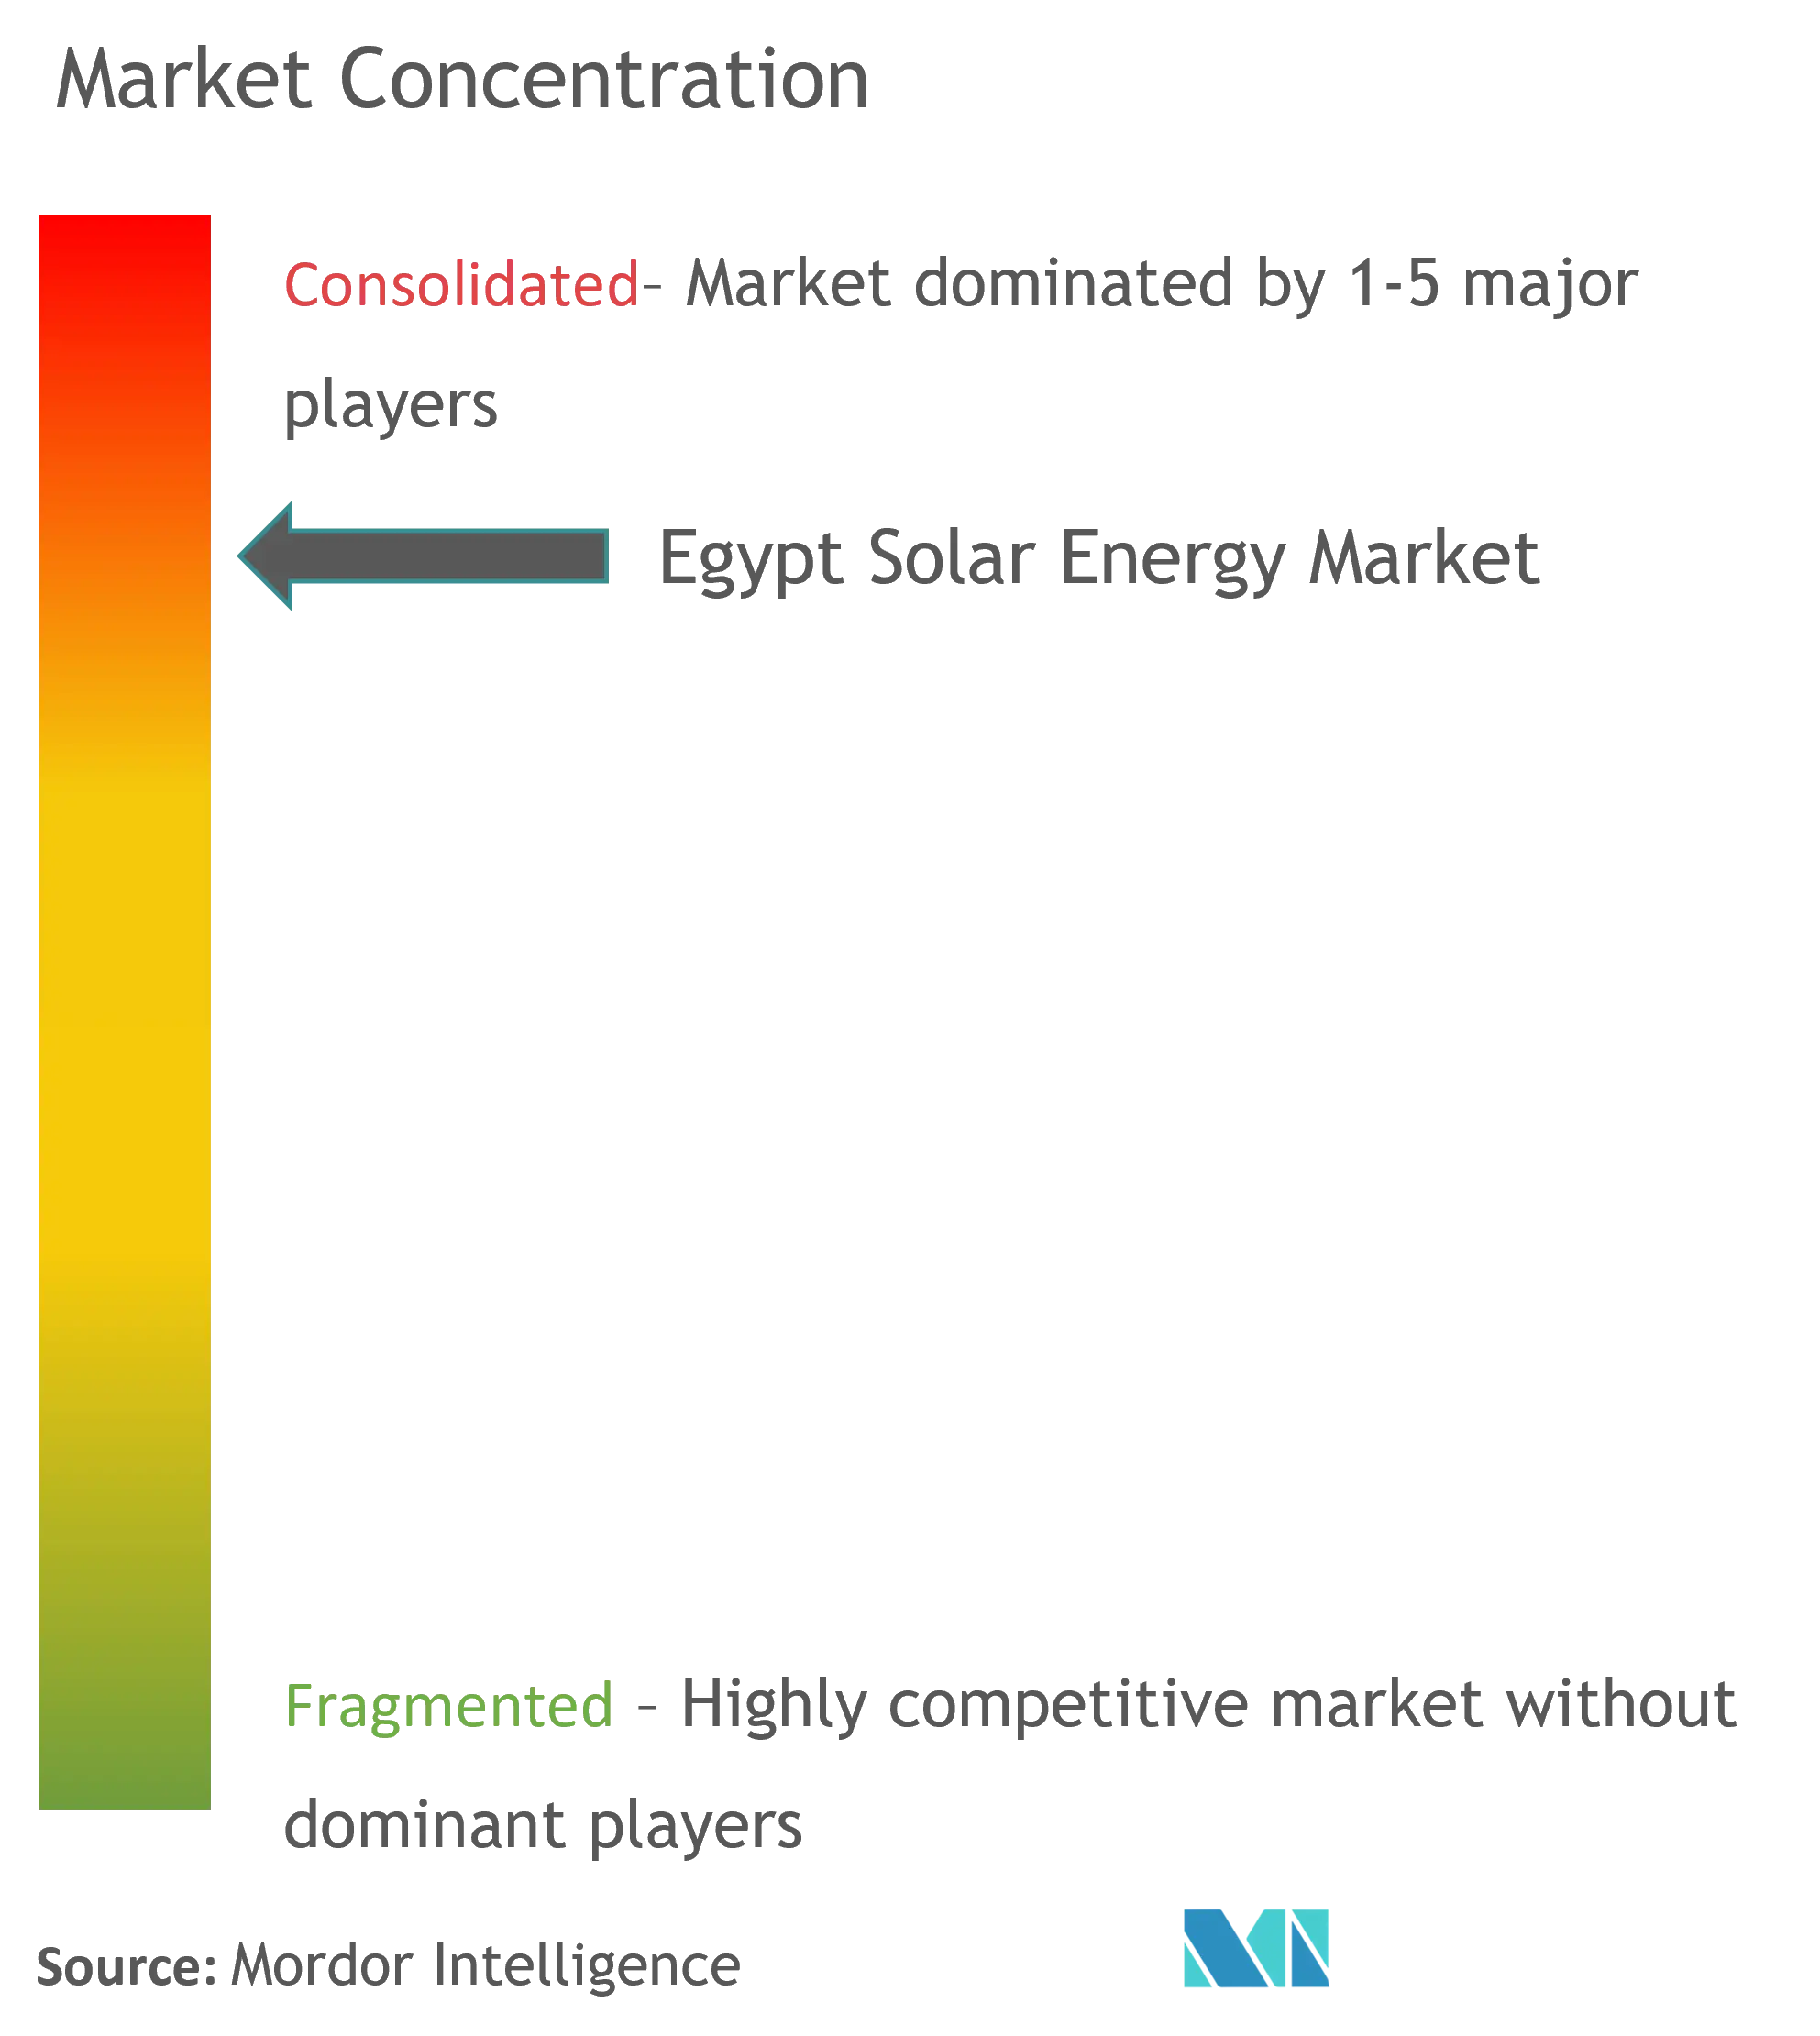 Market Concentration - Egypt Solar Energy Market.png